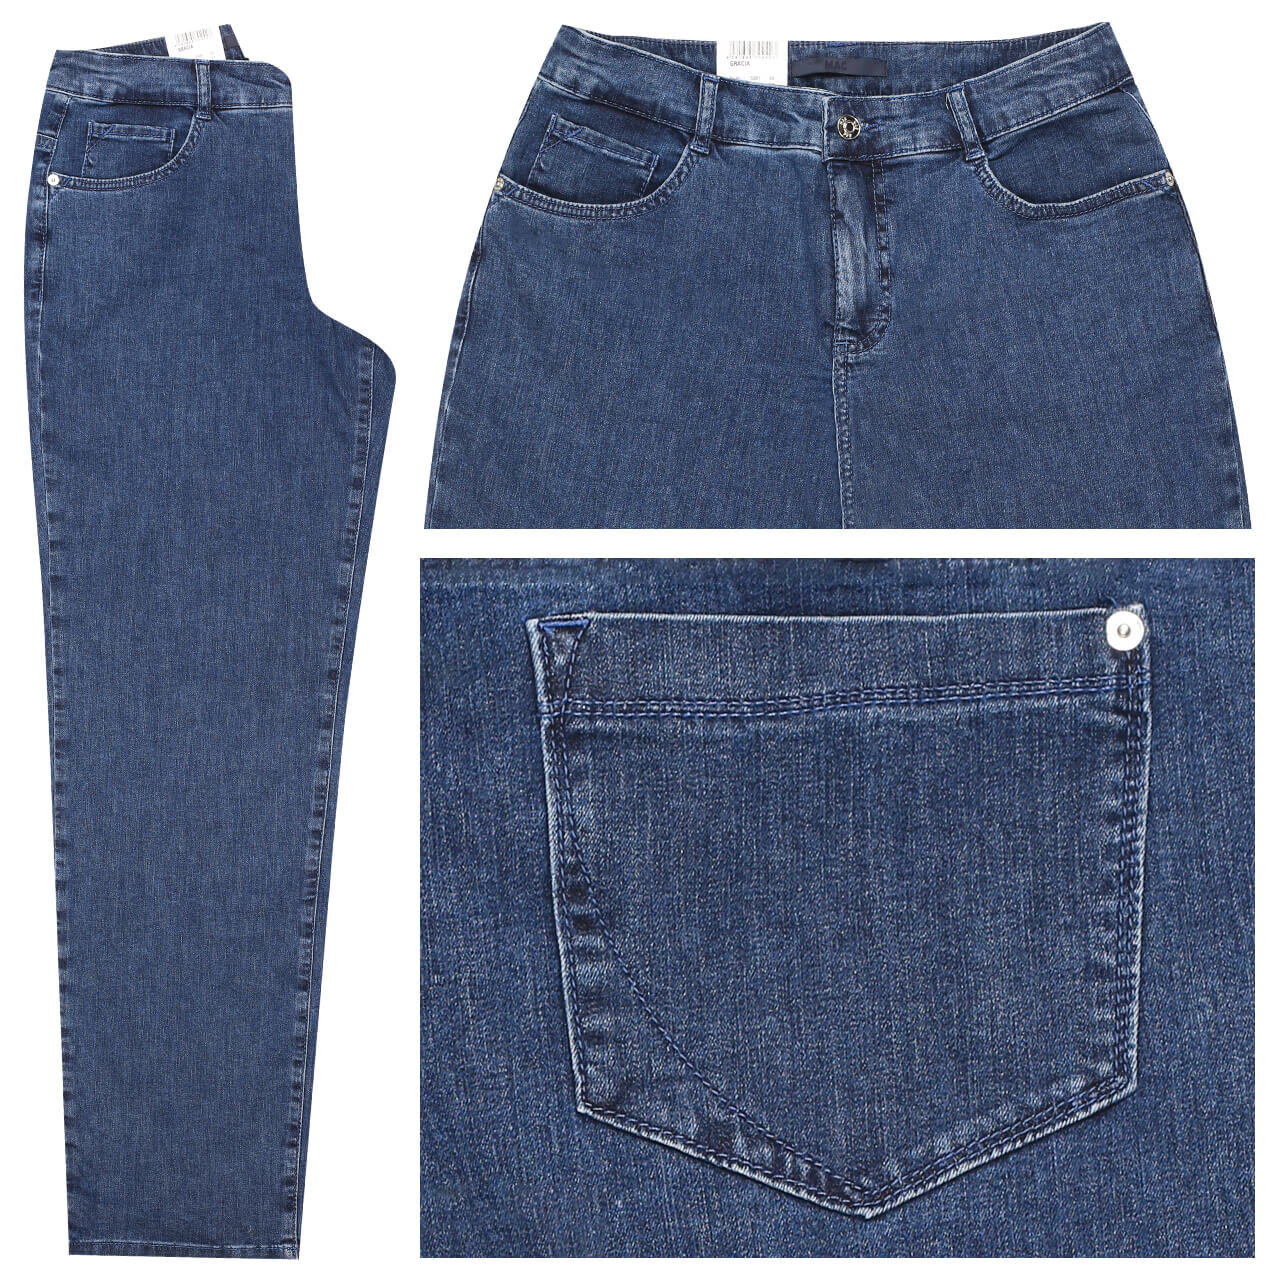 MAC Jeans Gracia für Damen in Mittelblau, FarbNr.: D690